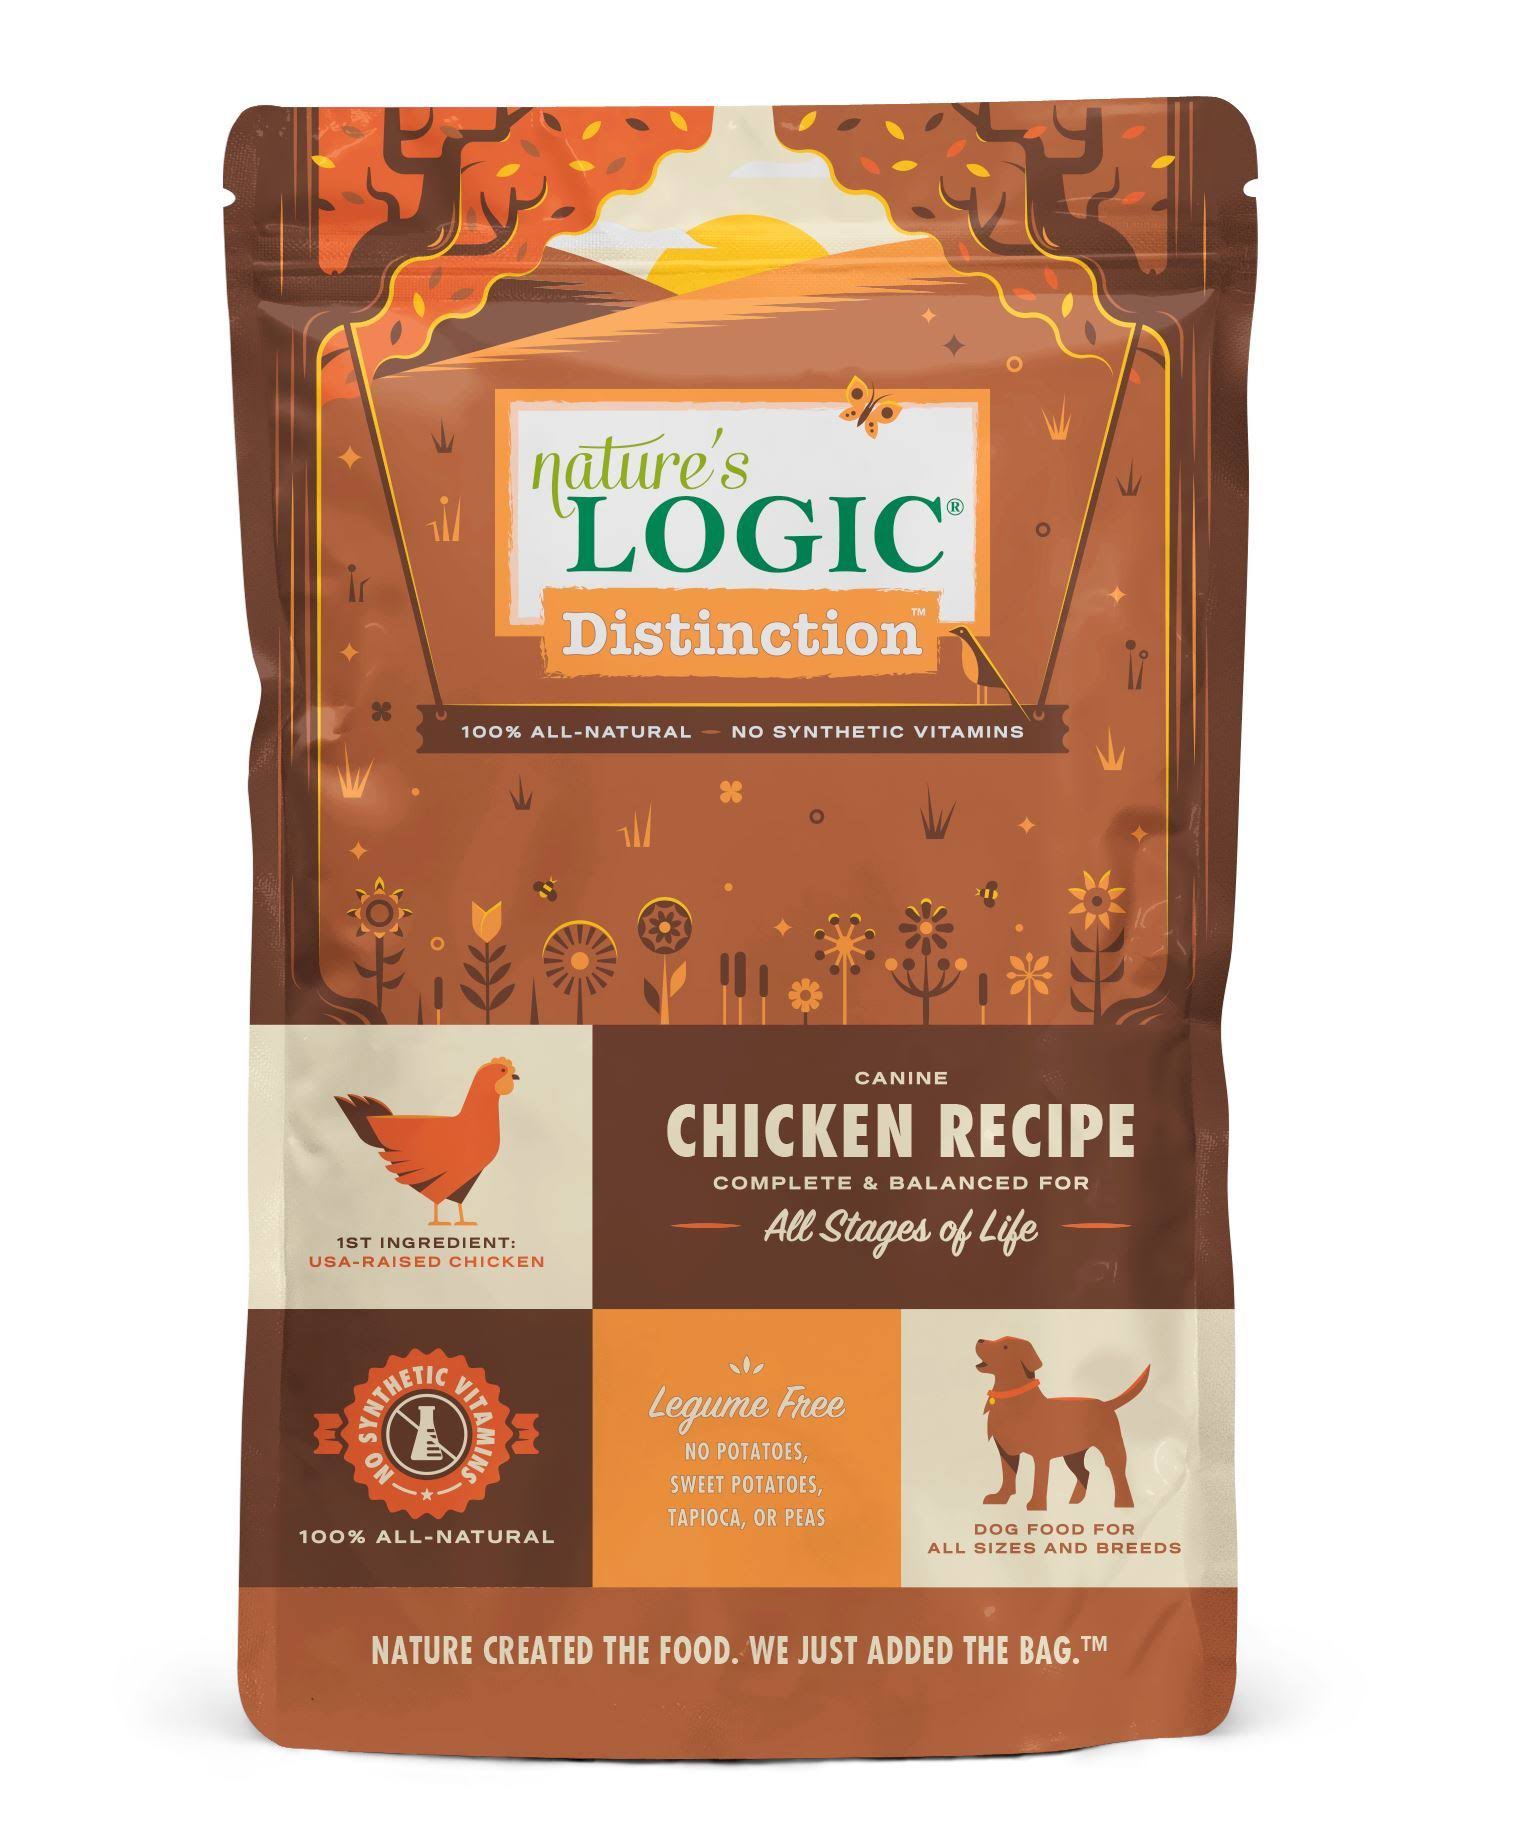 Nature's Logic Distinction Chicken Recipe Dry Dog Food - 4.4 lb